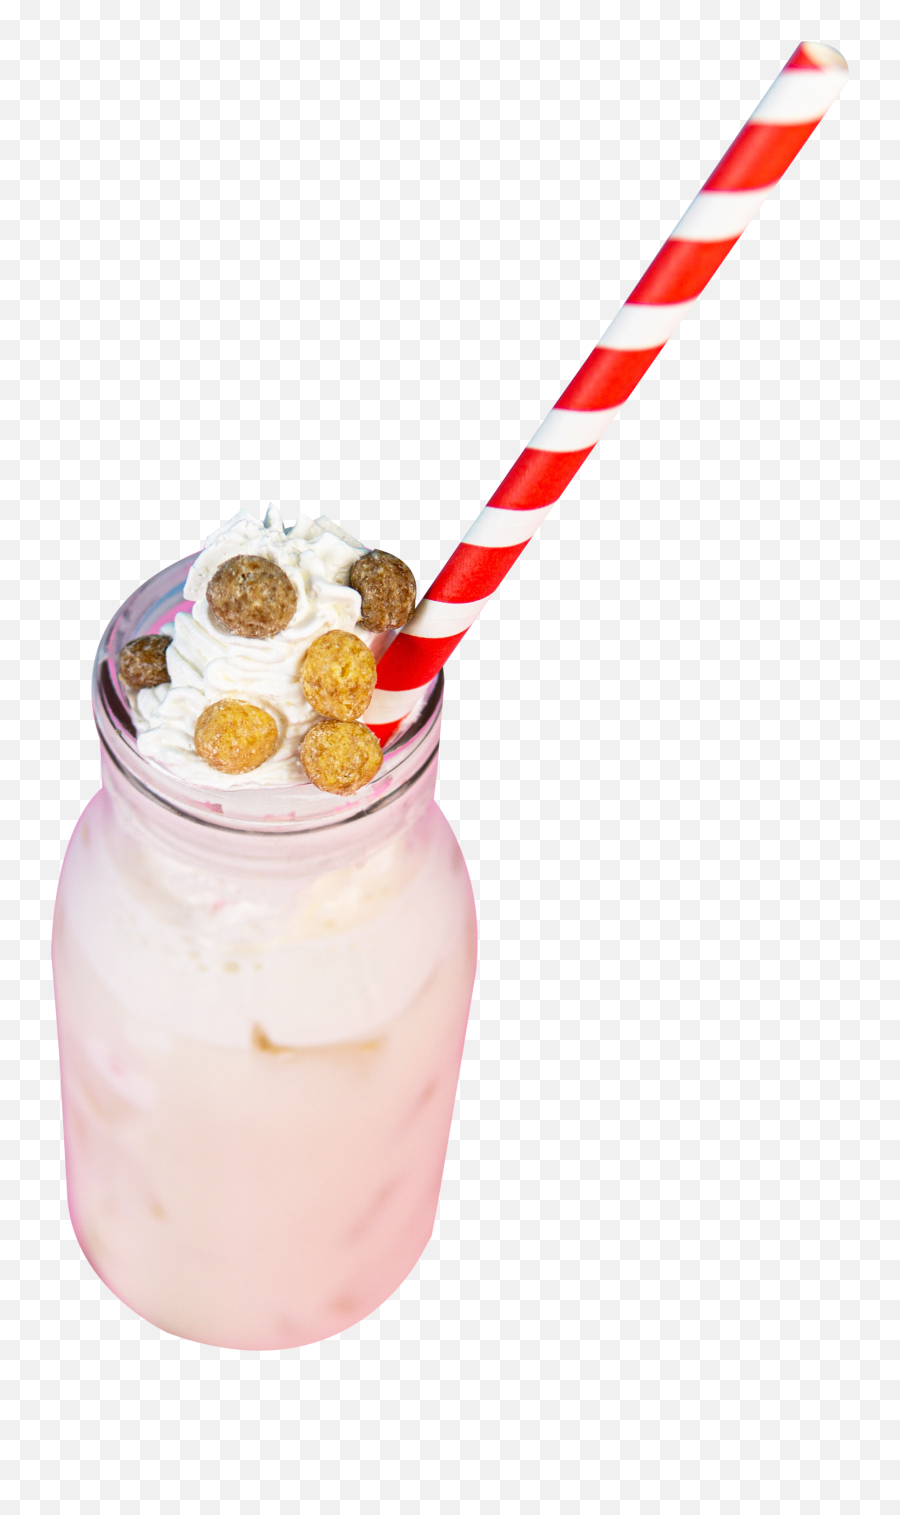 Milkshake Png Transparent Image - Pngpix Emoji,Milkshake Png